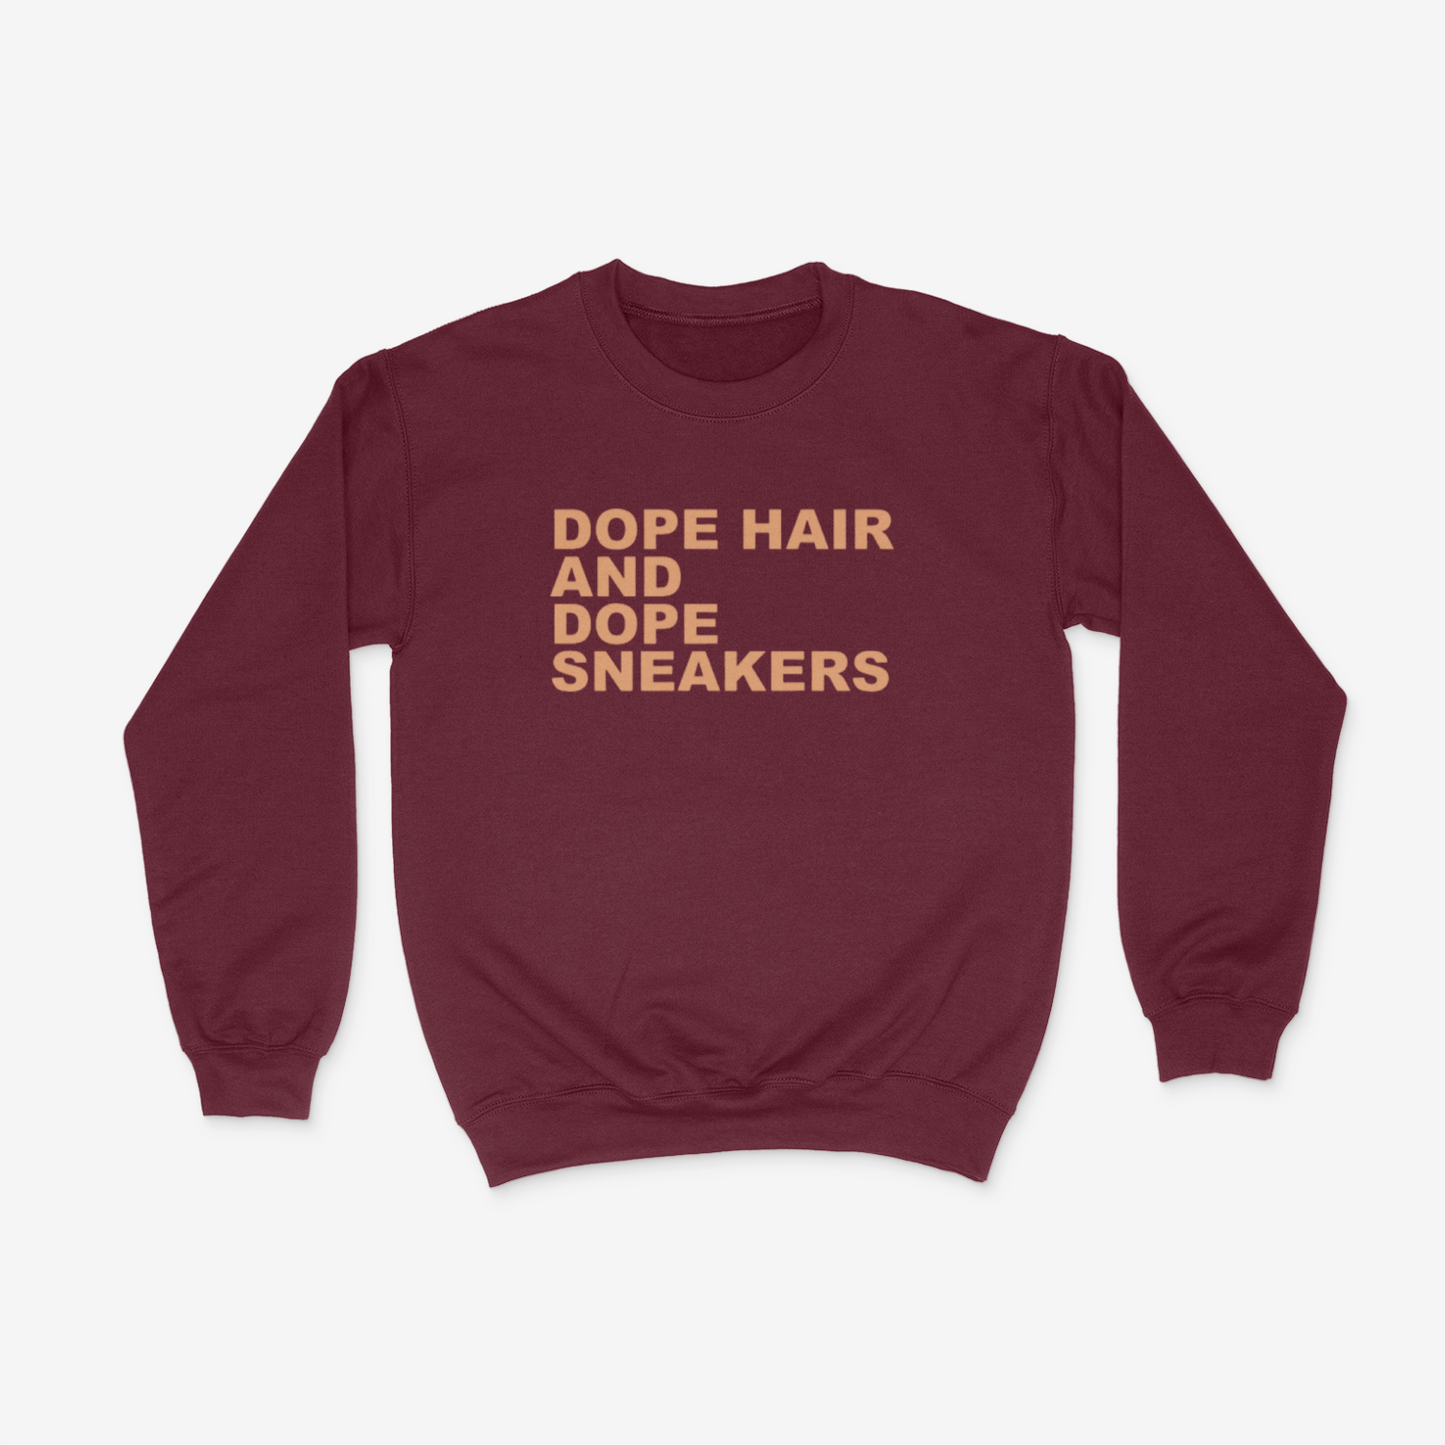 Dope Hair and Dope Sneakers Crewneck( Tan)